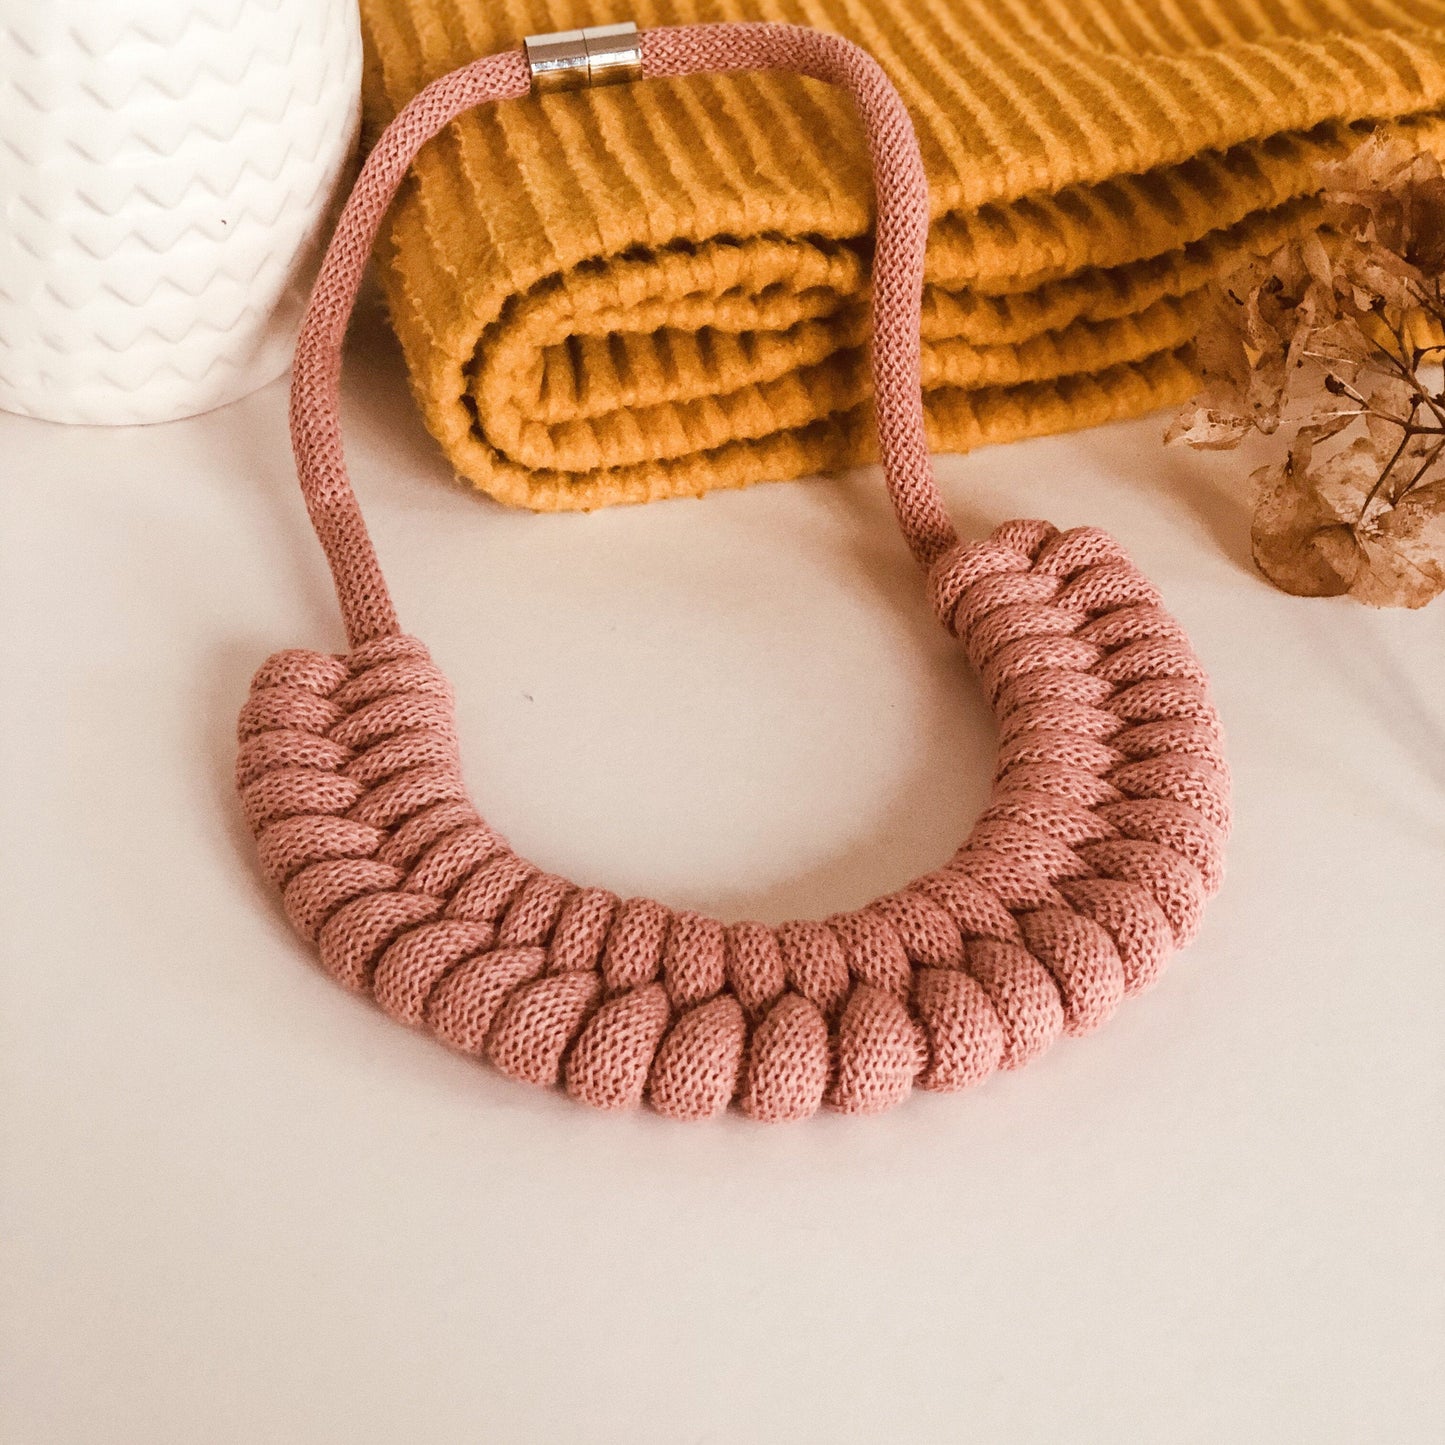 Knotted ‘Carina’ necklace - Blush pink - knottinger.